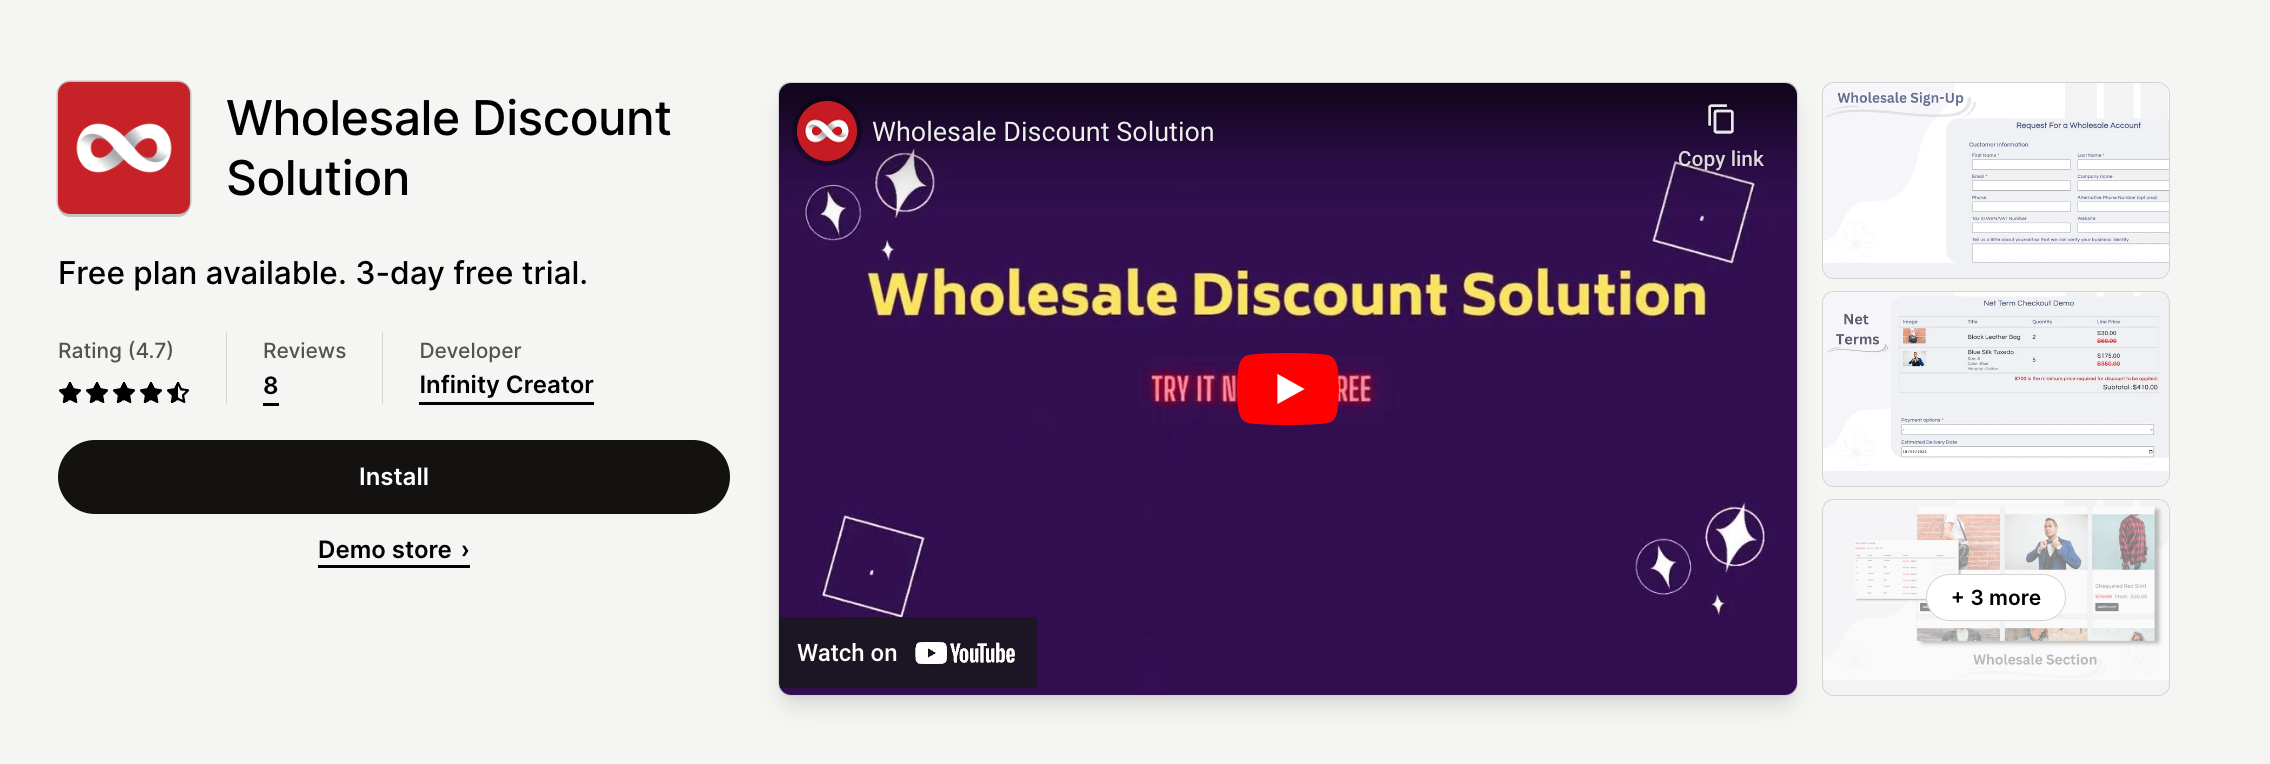 Wholesale Discount Solution